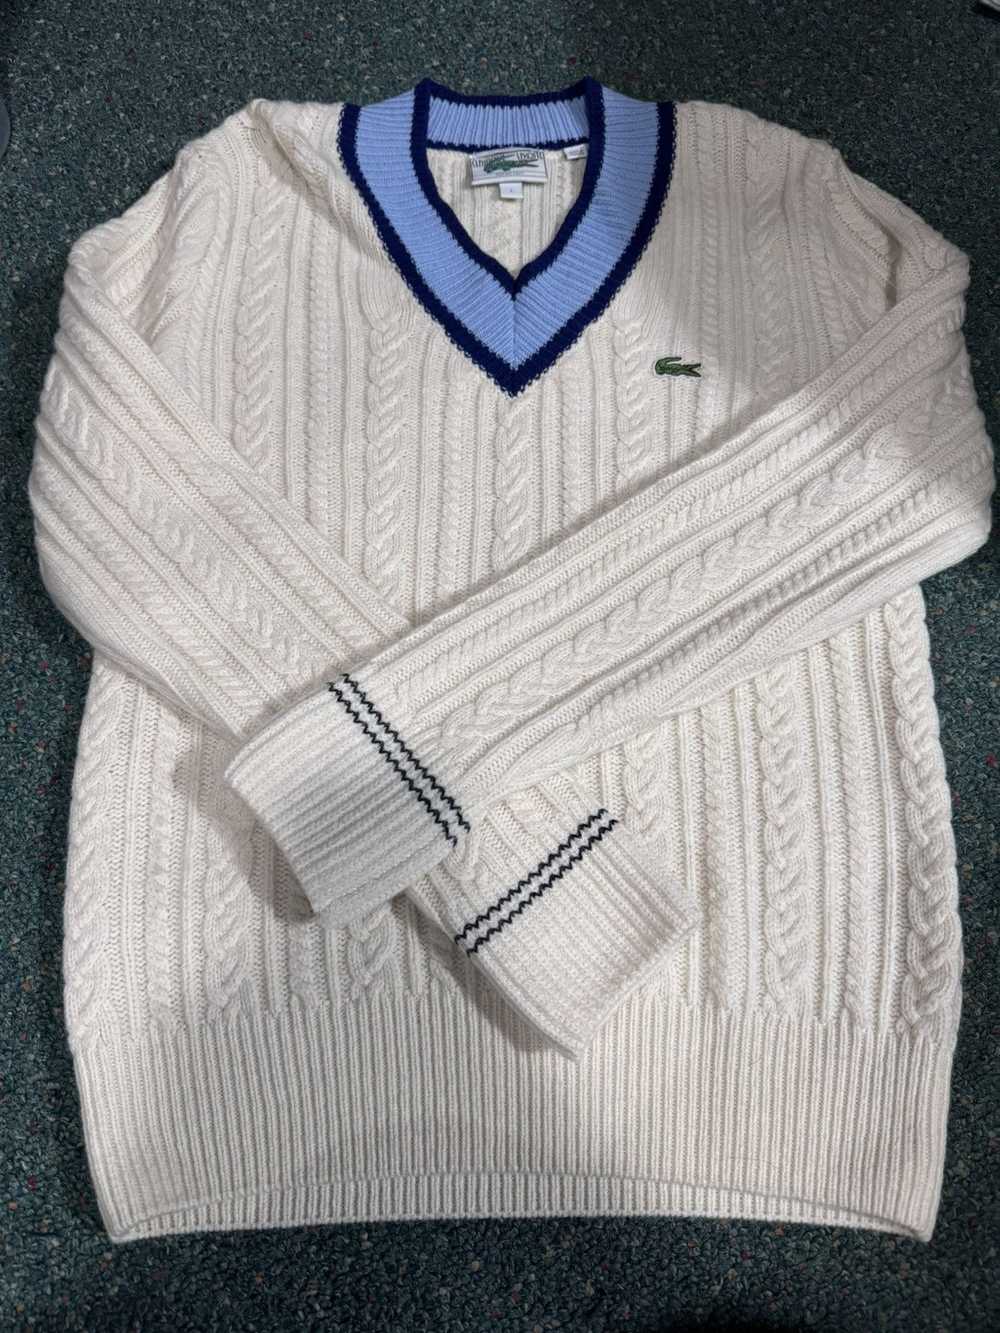 Lacoste Lacoste v neck cricket sweater - image 1